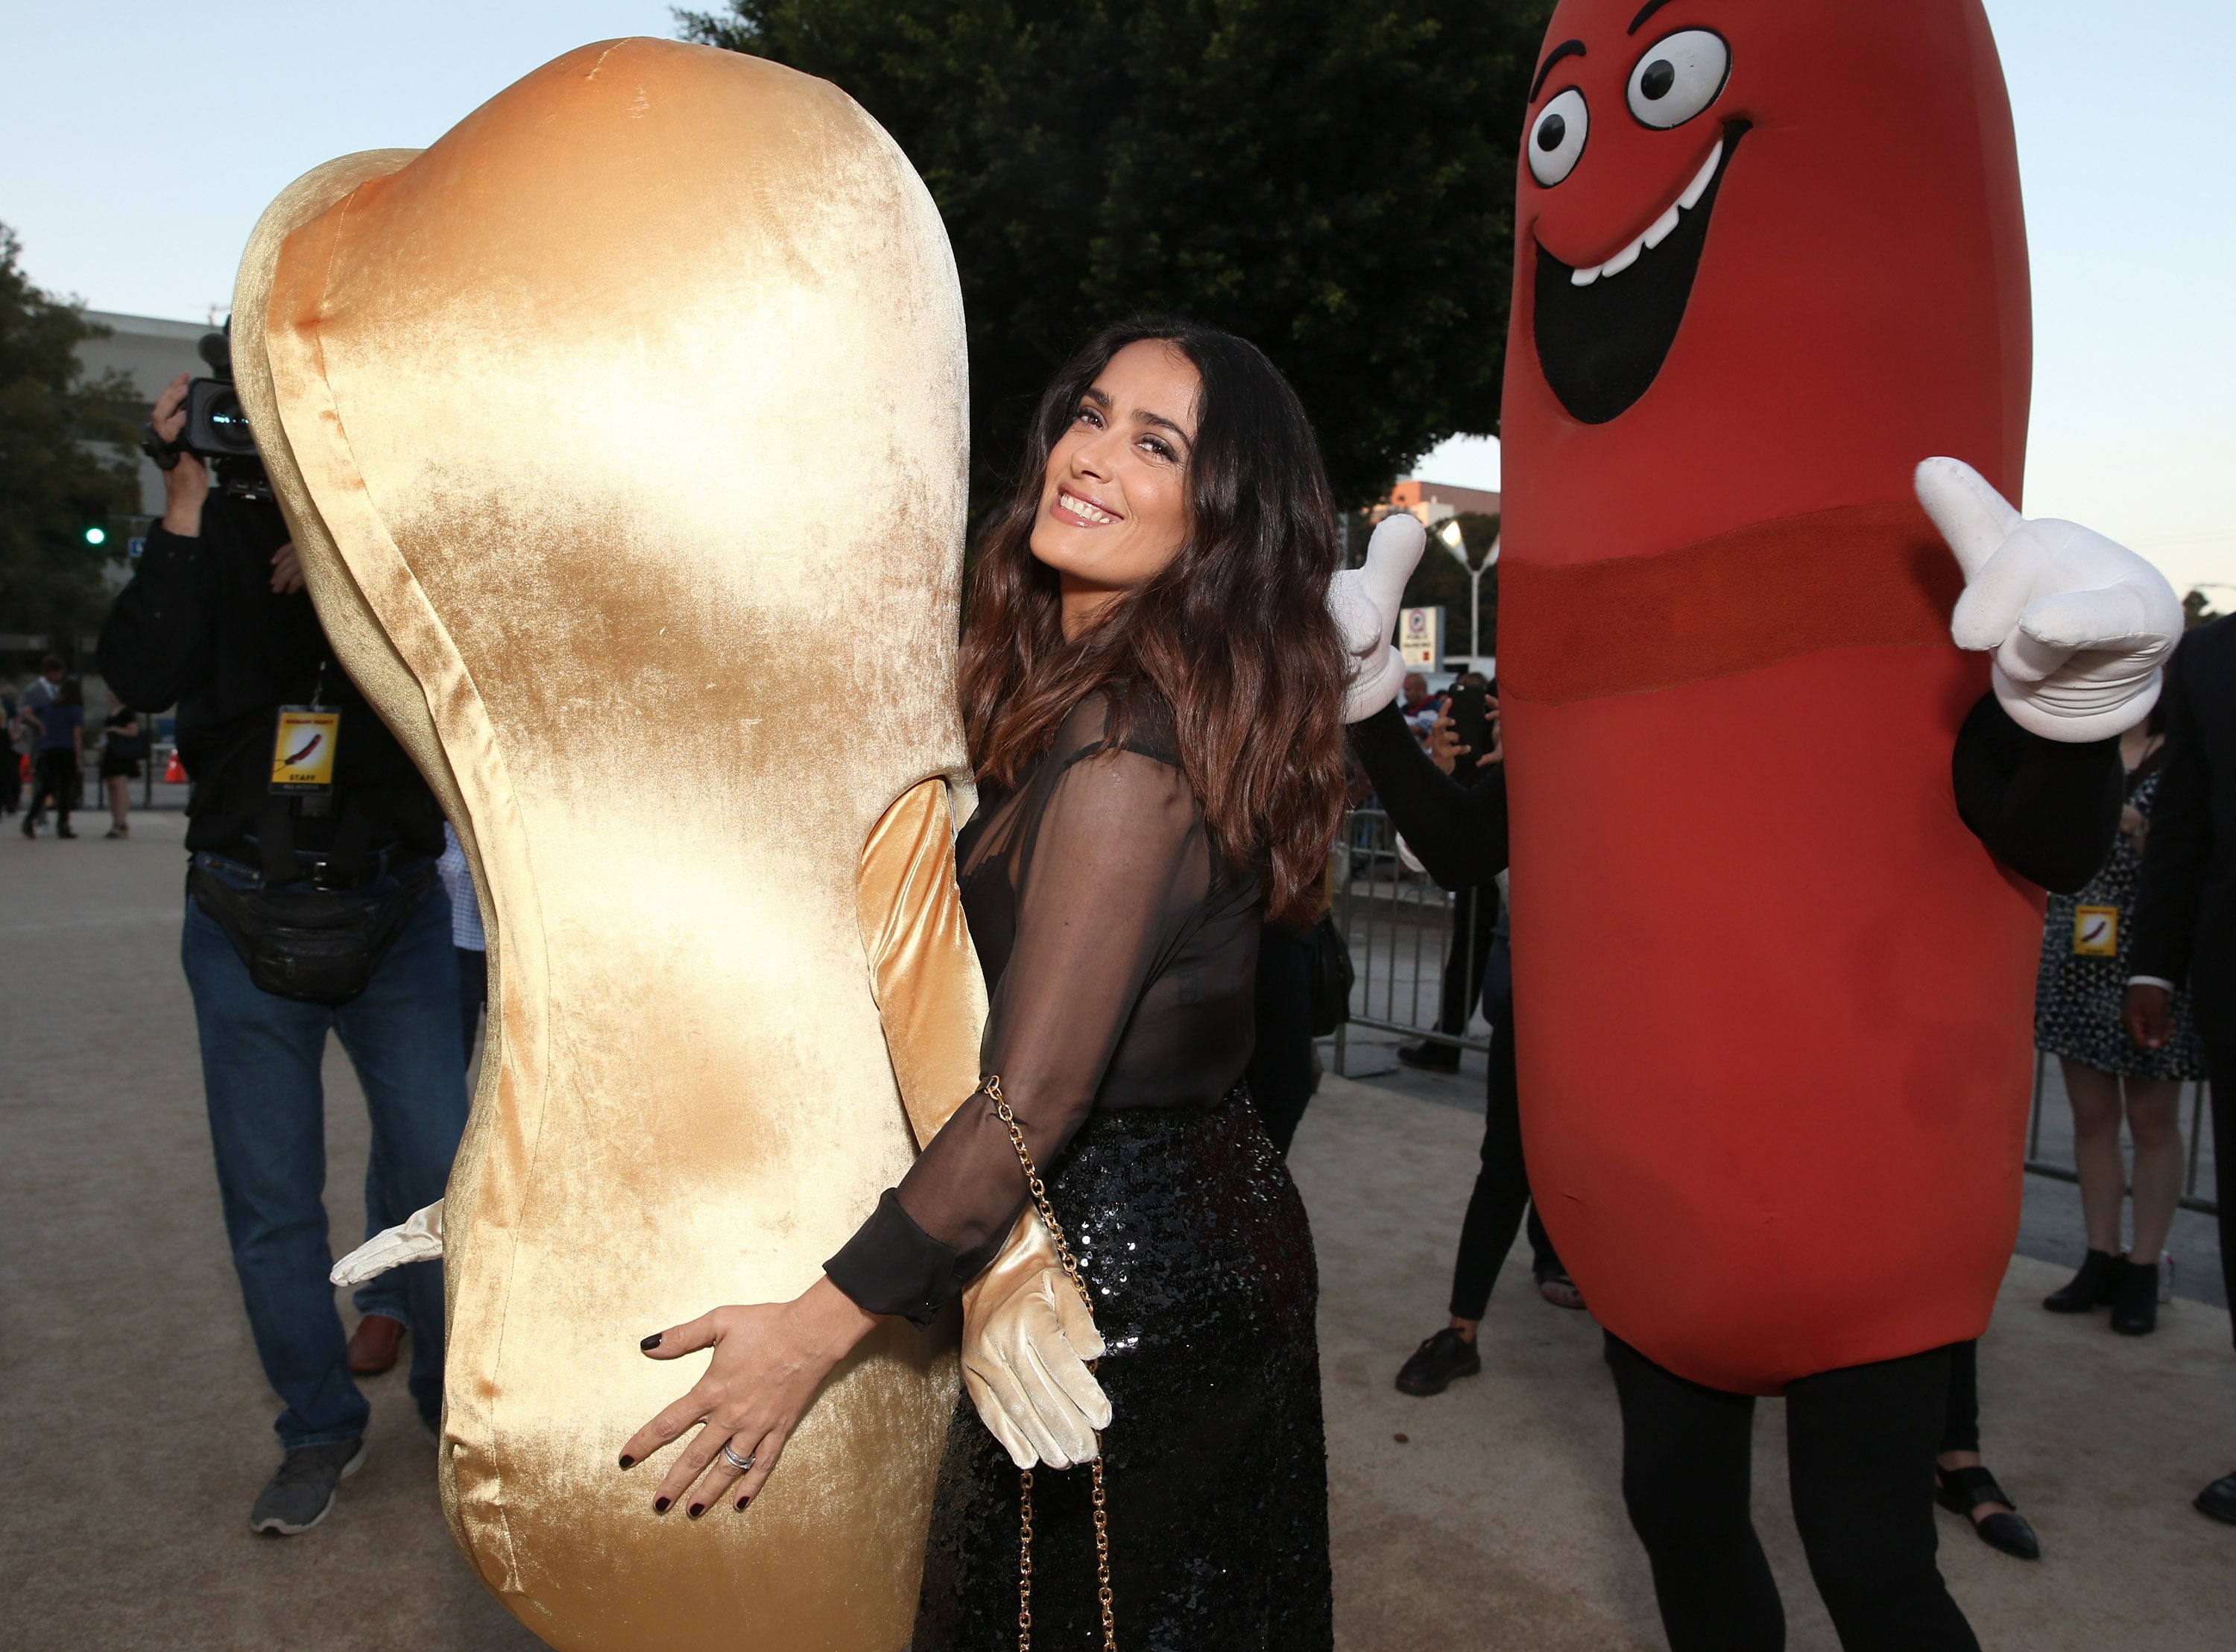 Salma Hayek Sequin Pants at Sausage Party Premiere 2016